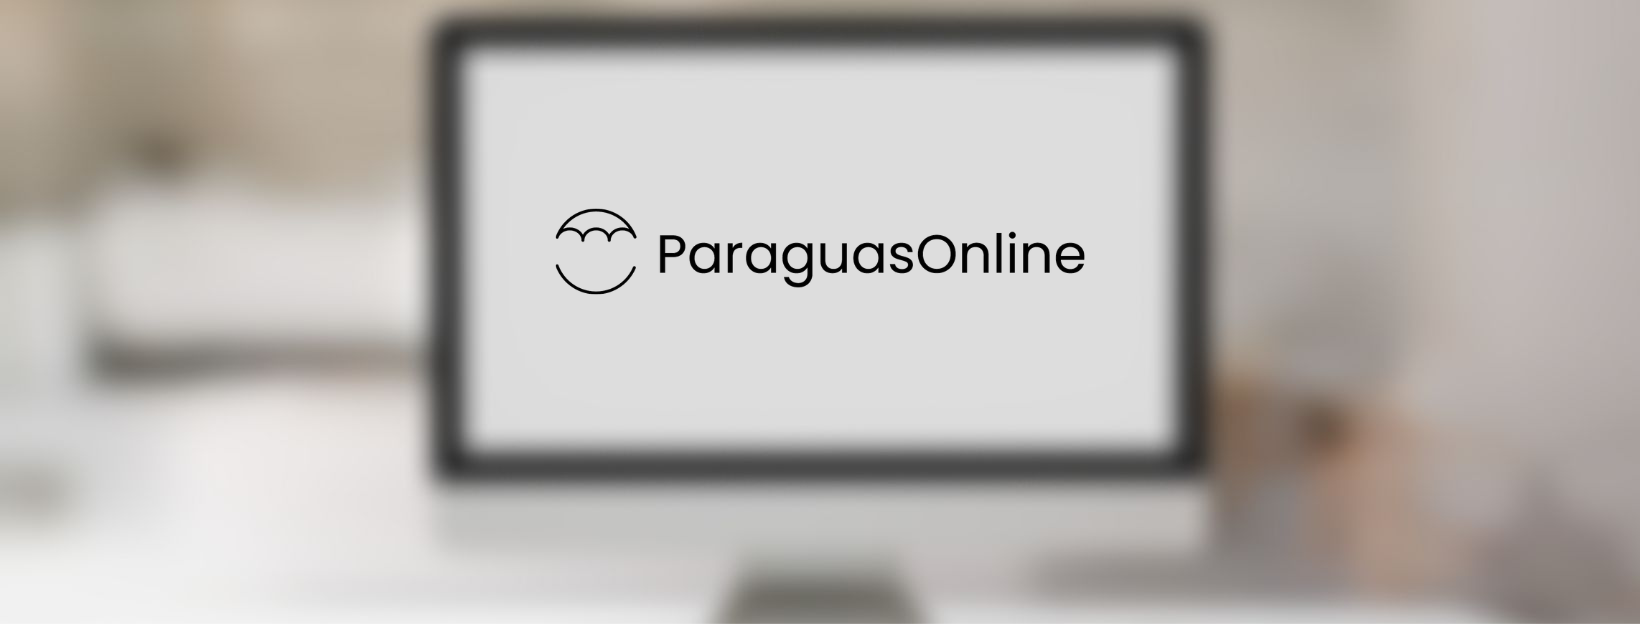 Remake pàgina web ParaguasOnline